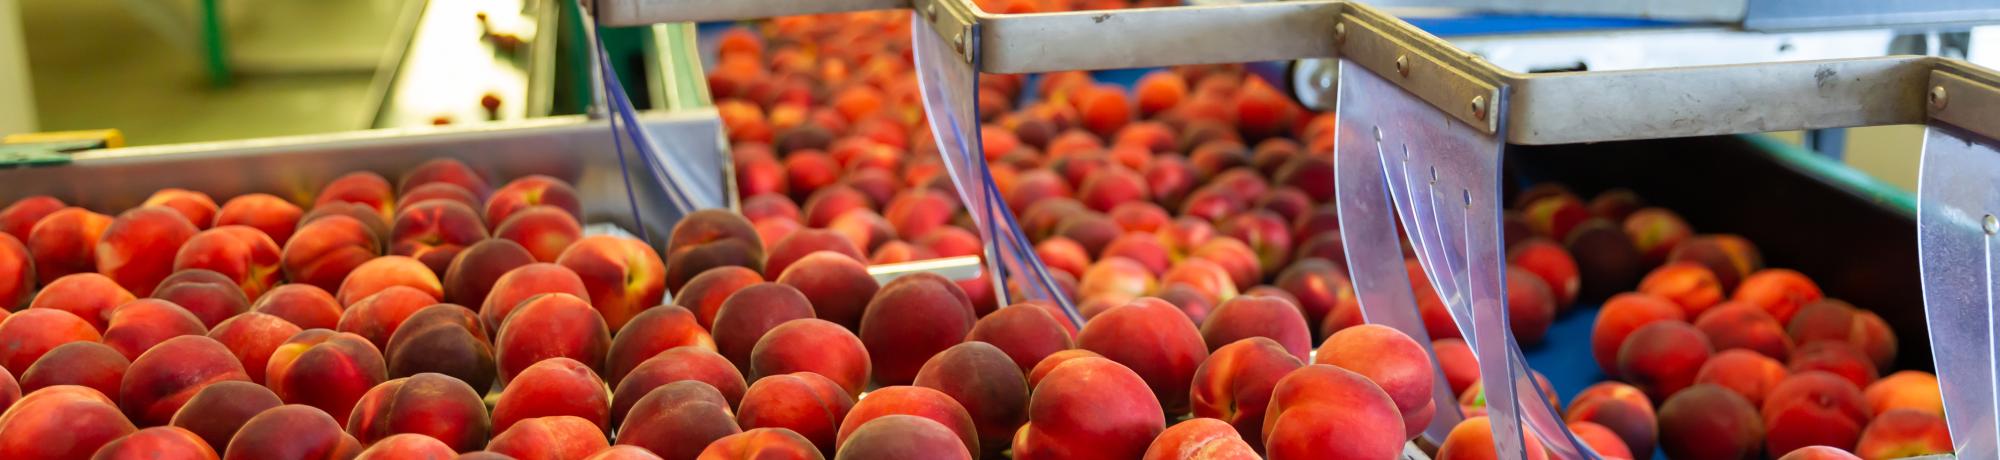 Peaches in a conveyor belt